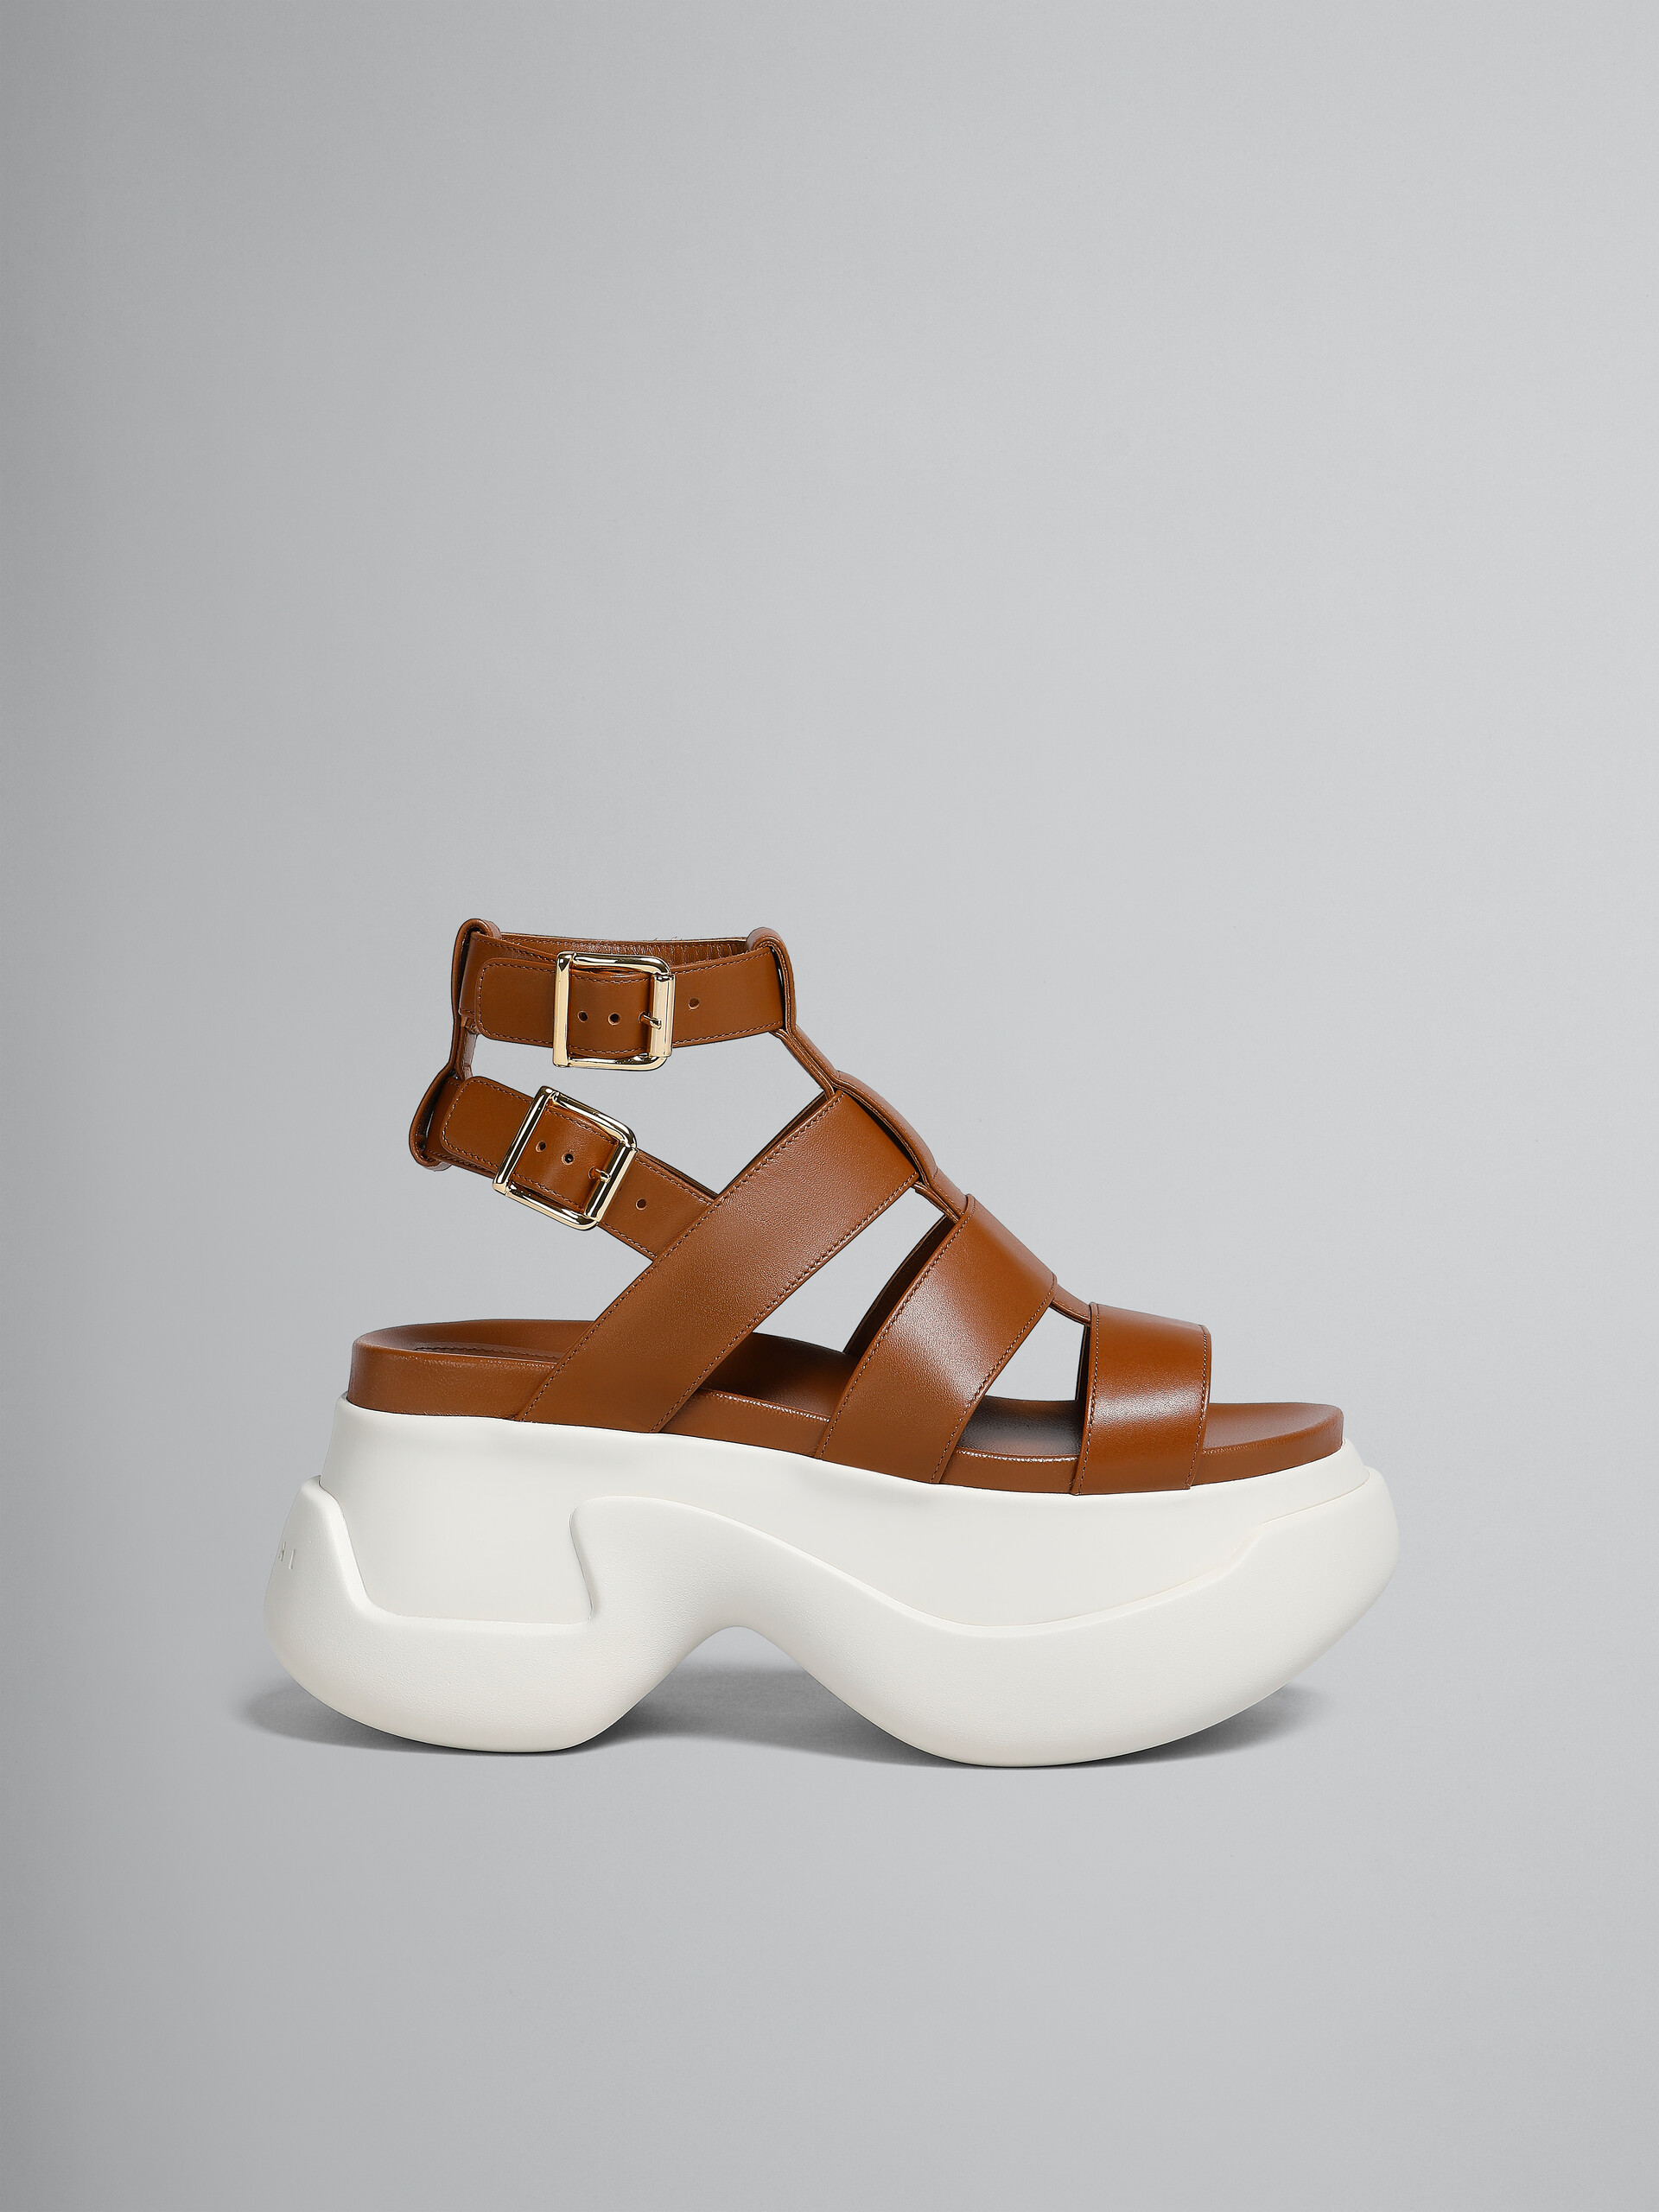 Brown leather gladiator sandal with platform sole - Sandals - Image 1